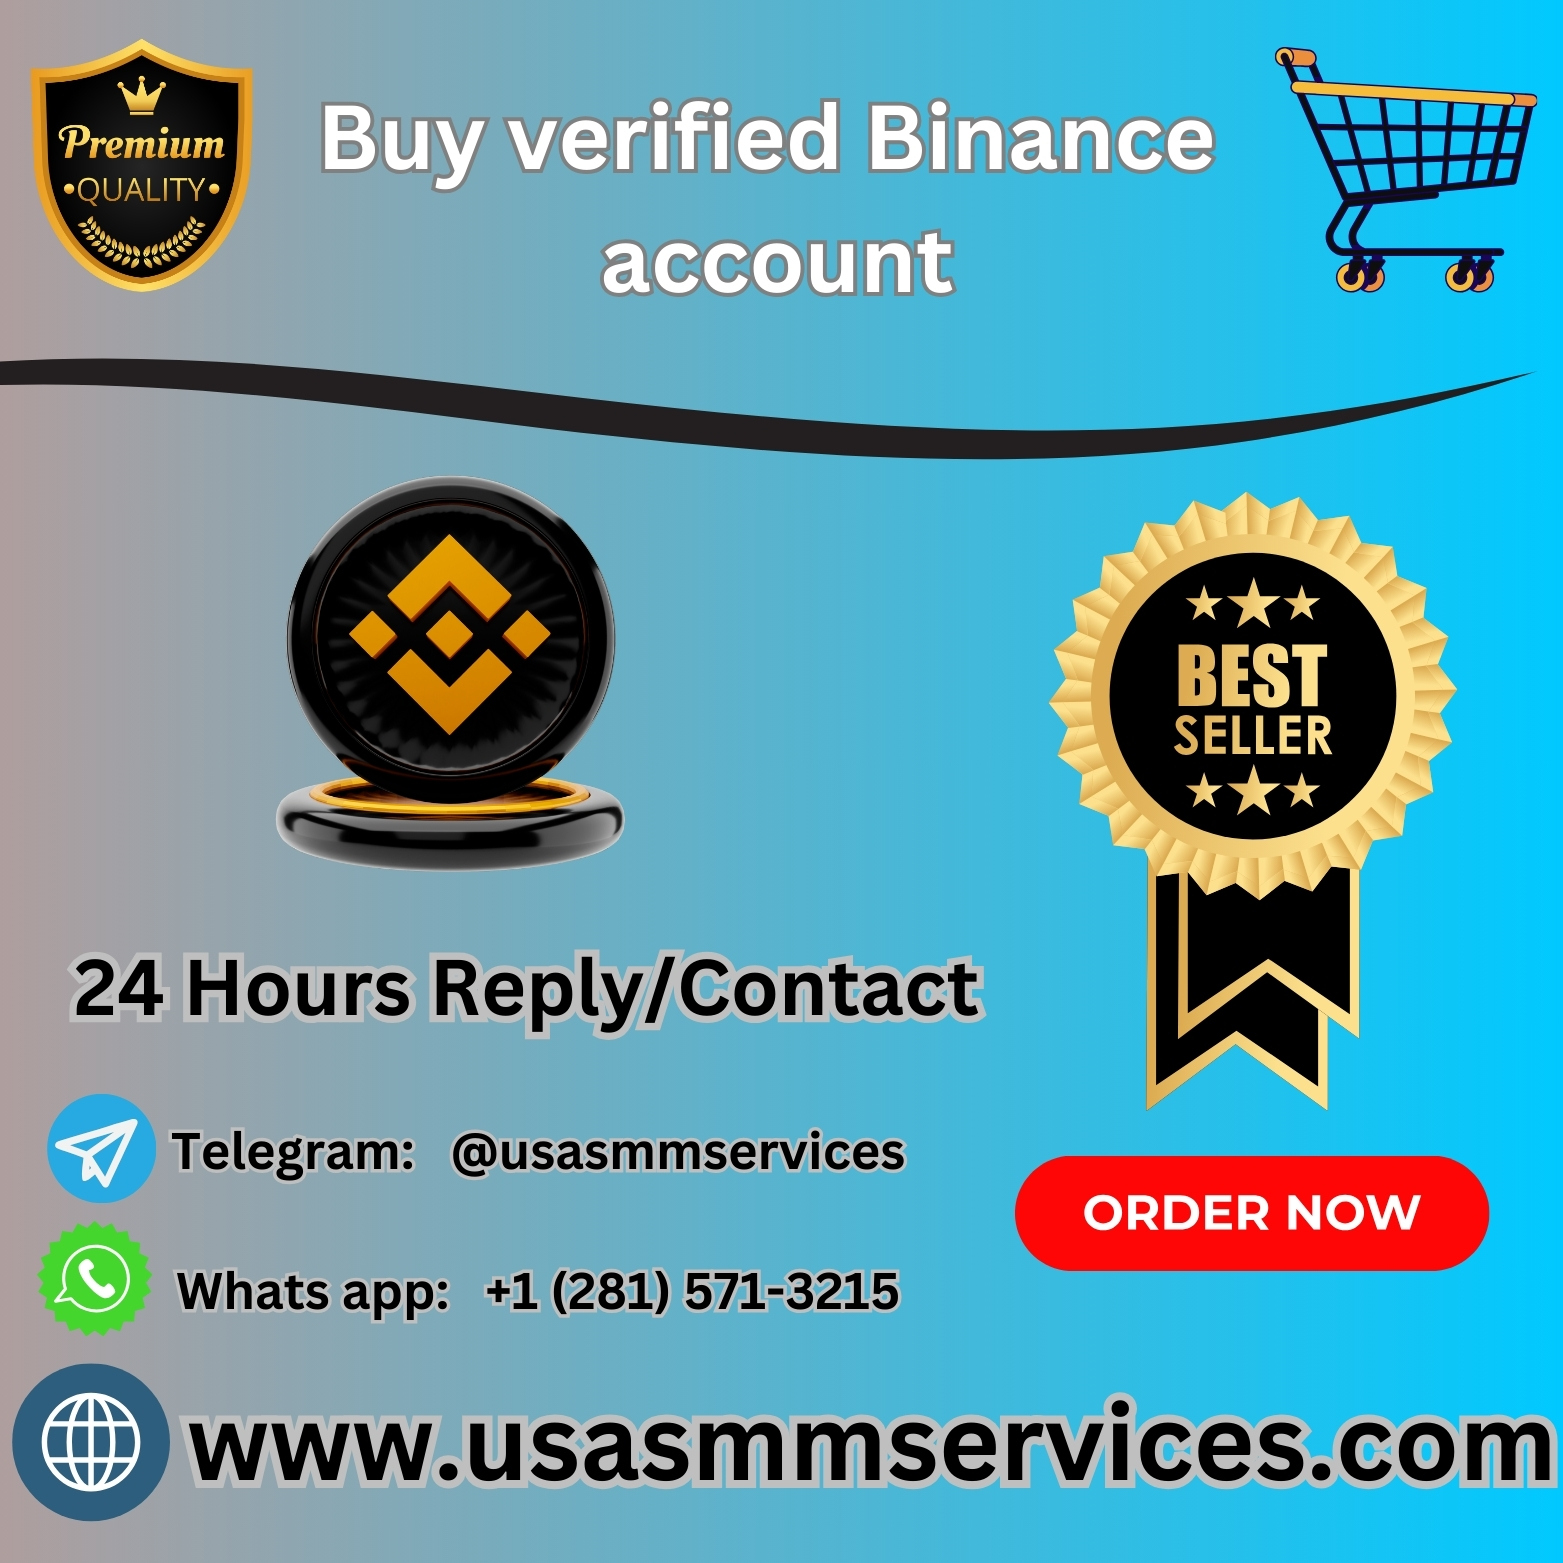 Buy Verified Binance Accounts - 100% KYC verified binance